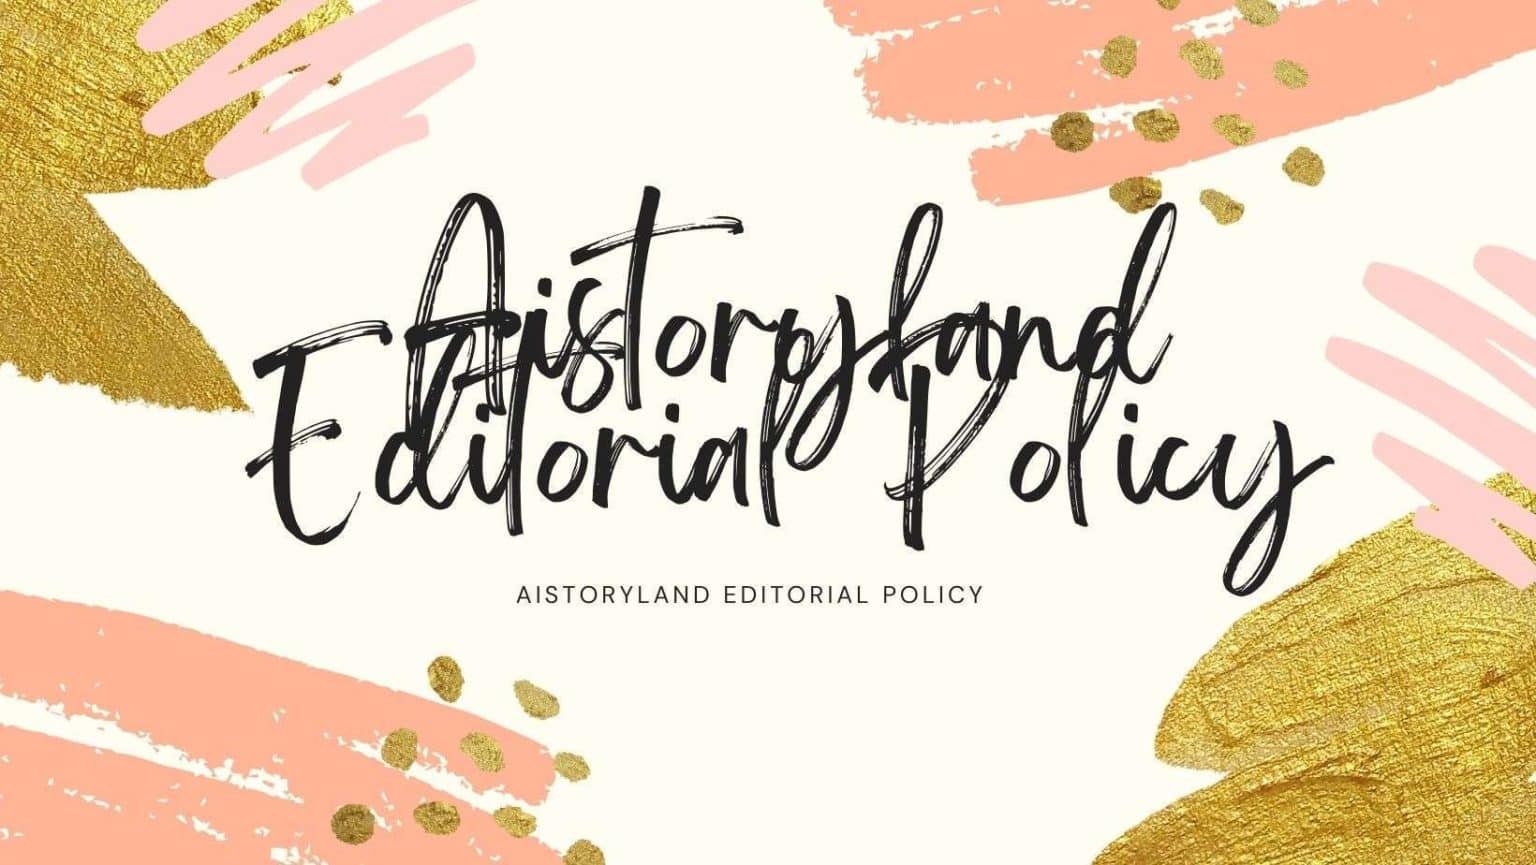 Aistoryland Editorial Policy